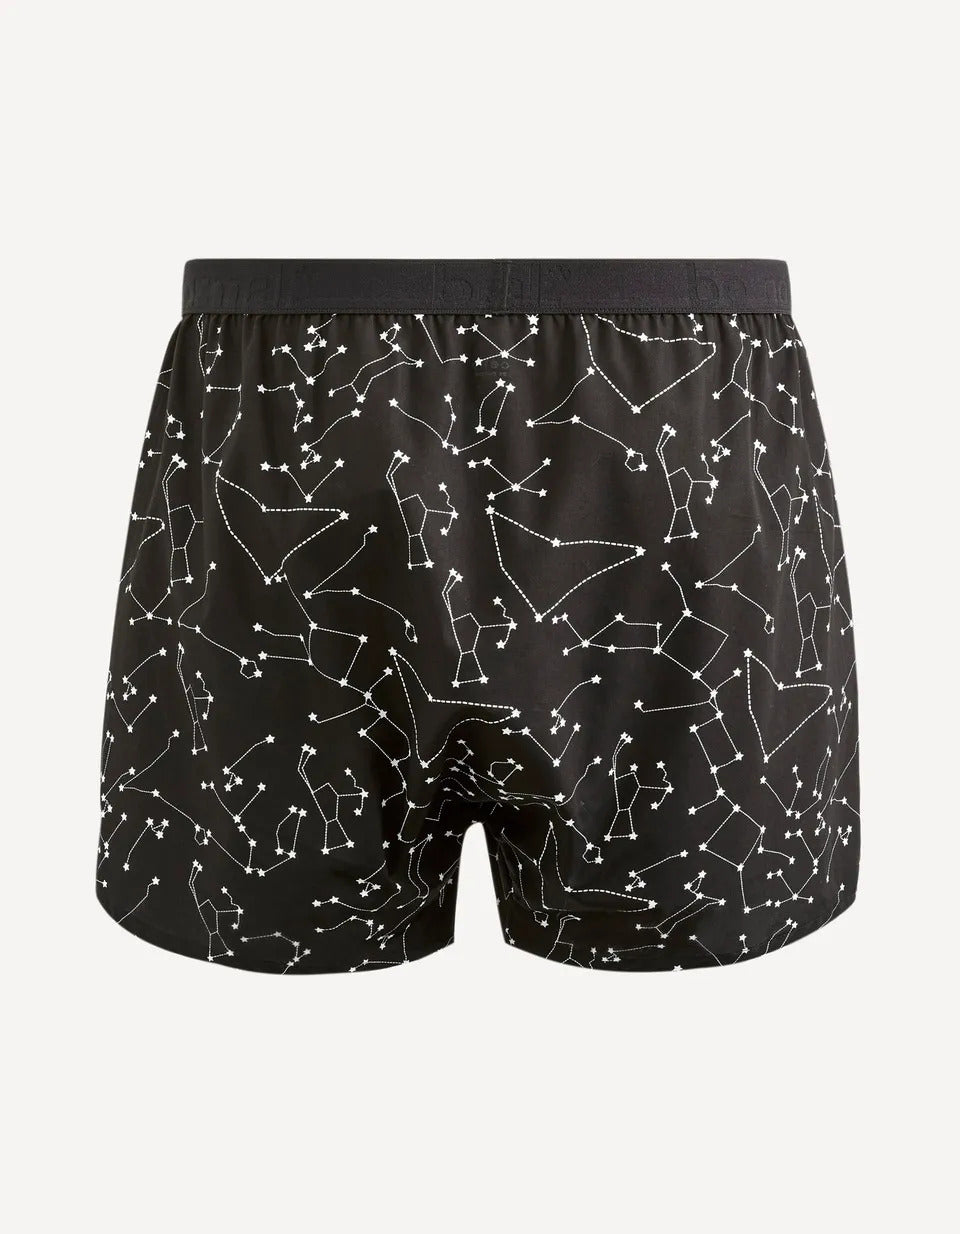 Constellation 100% Cotton Poplin Boxer Shorts - Black - 02